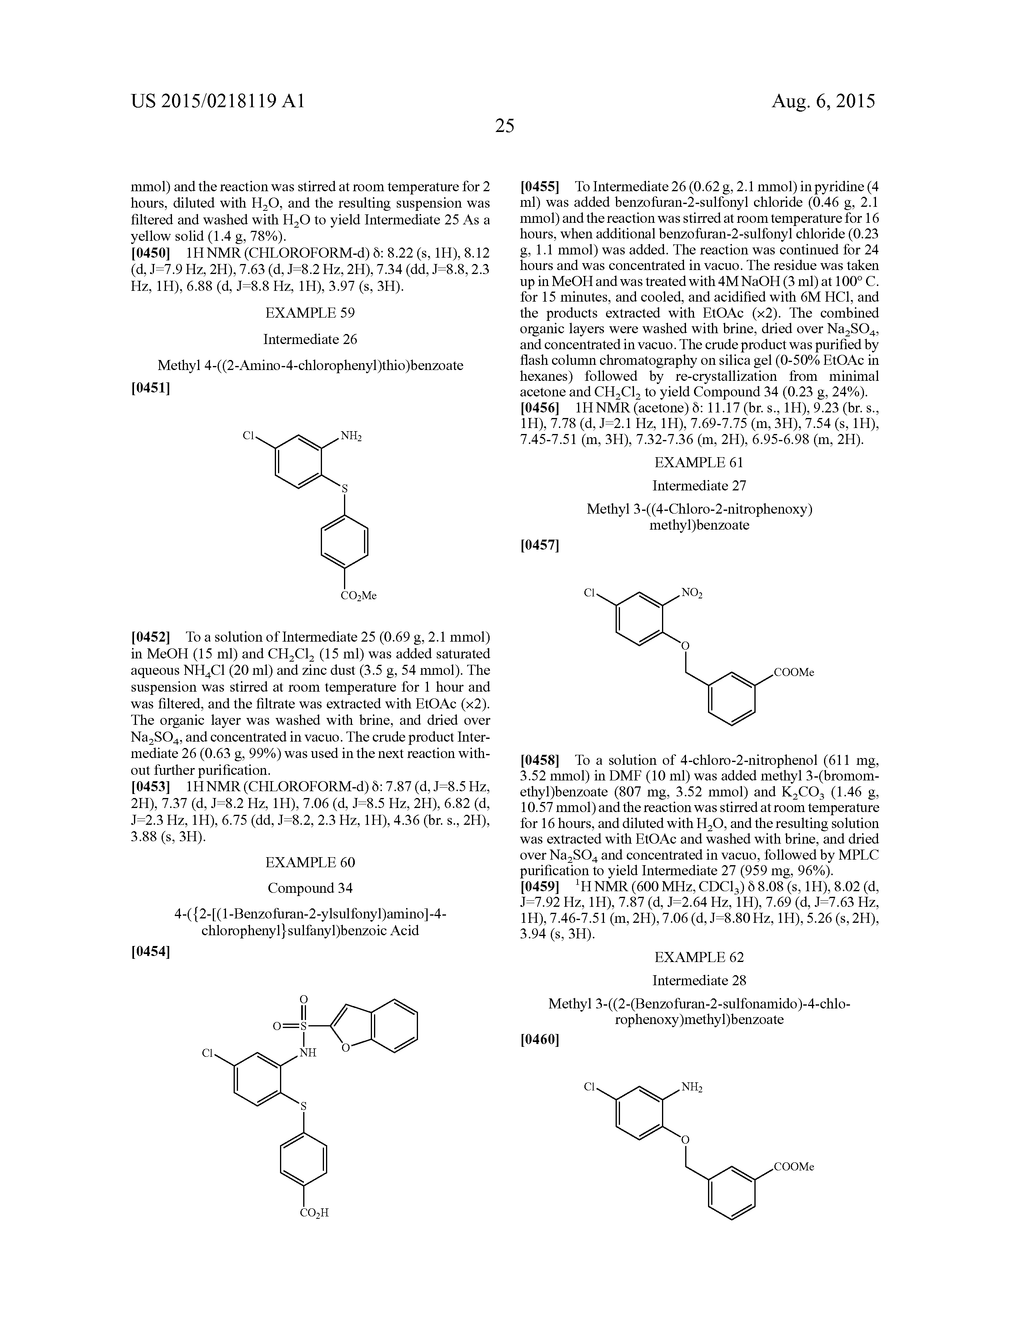 BENZOFURAN-2-SULFONAMIDES DERIVATIVES AS CHEMOKINE RECEPTOR MODULATORS - diagram, schematic, and image 26